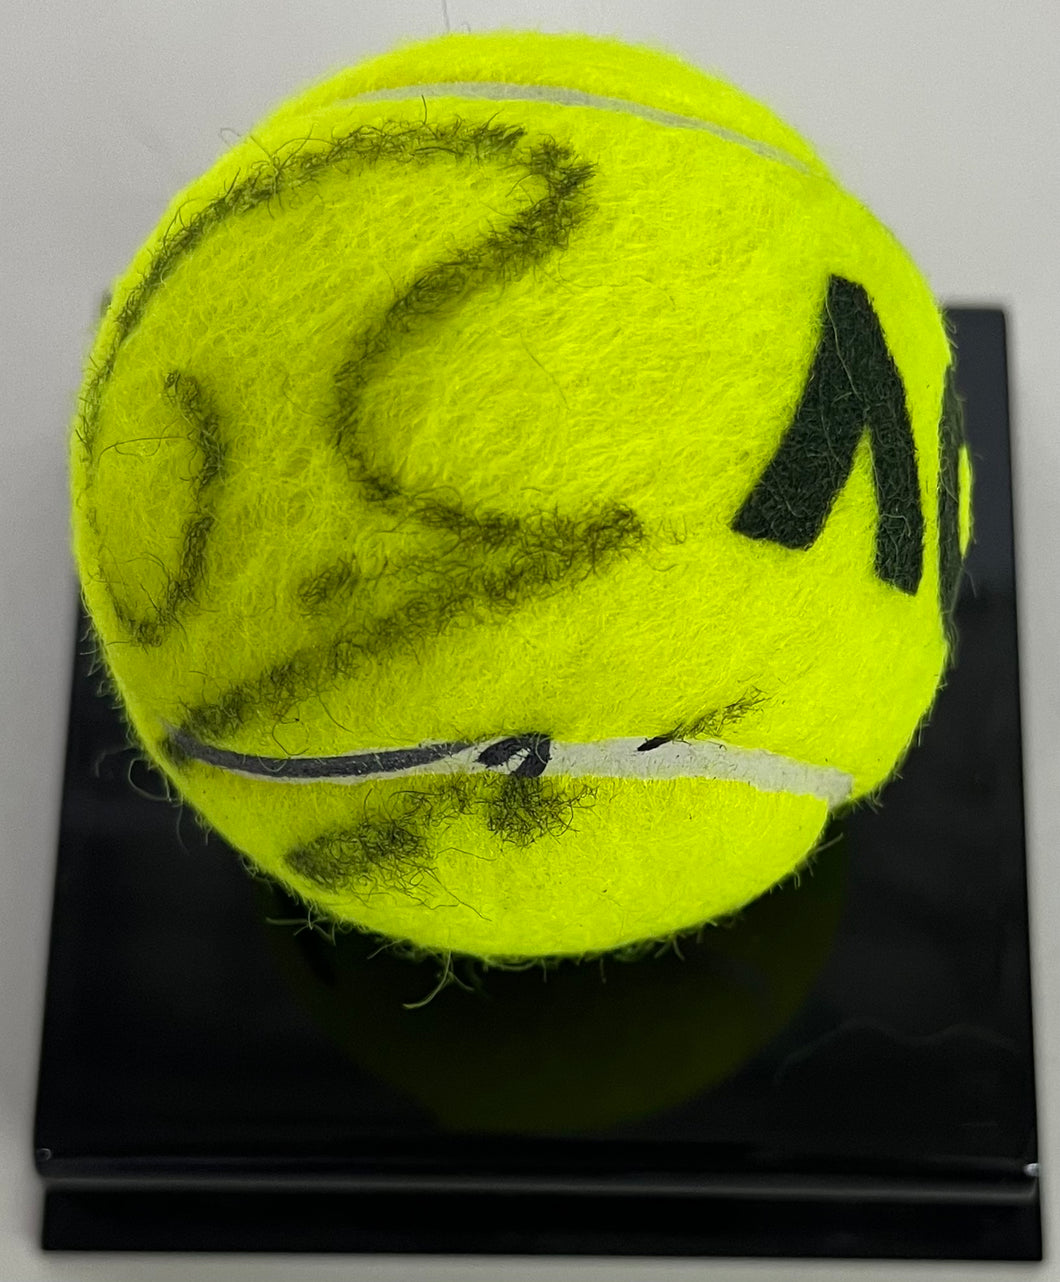 RAFAEL NADAL Signed AO Tennis Ball in Display Box